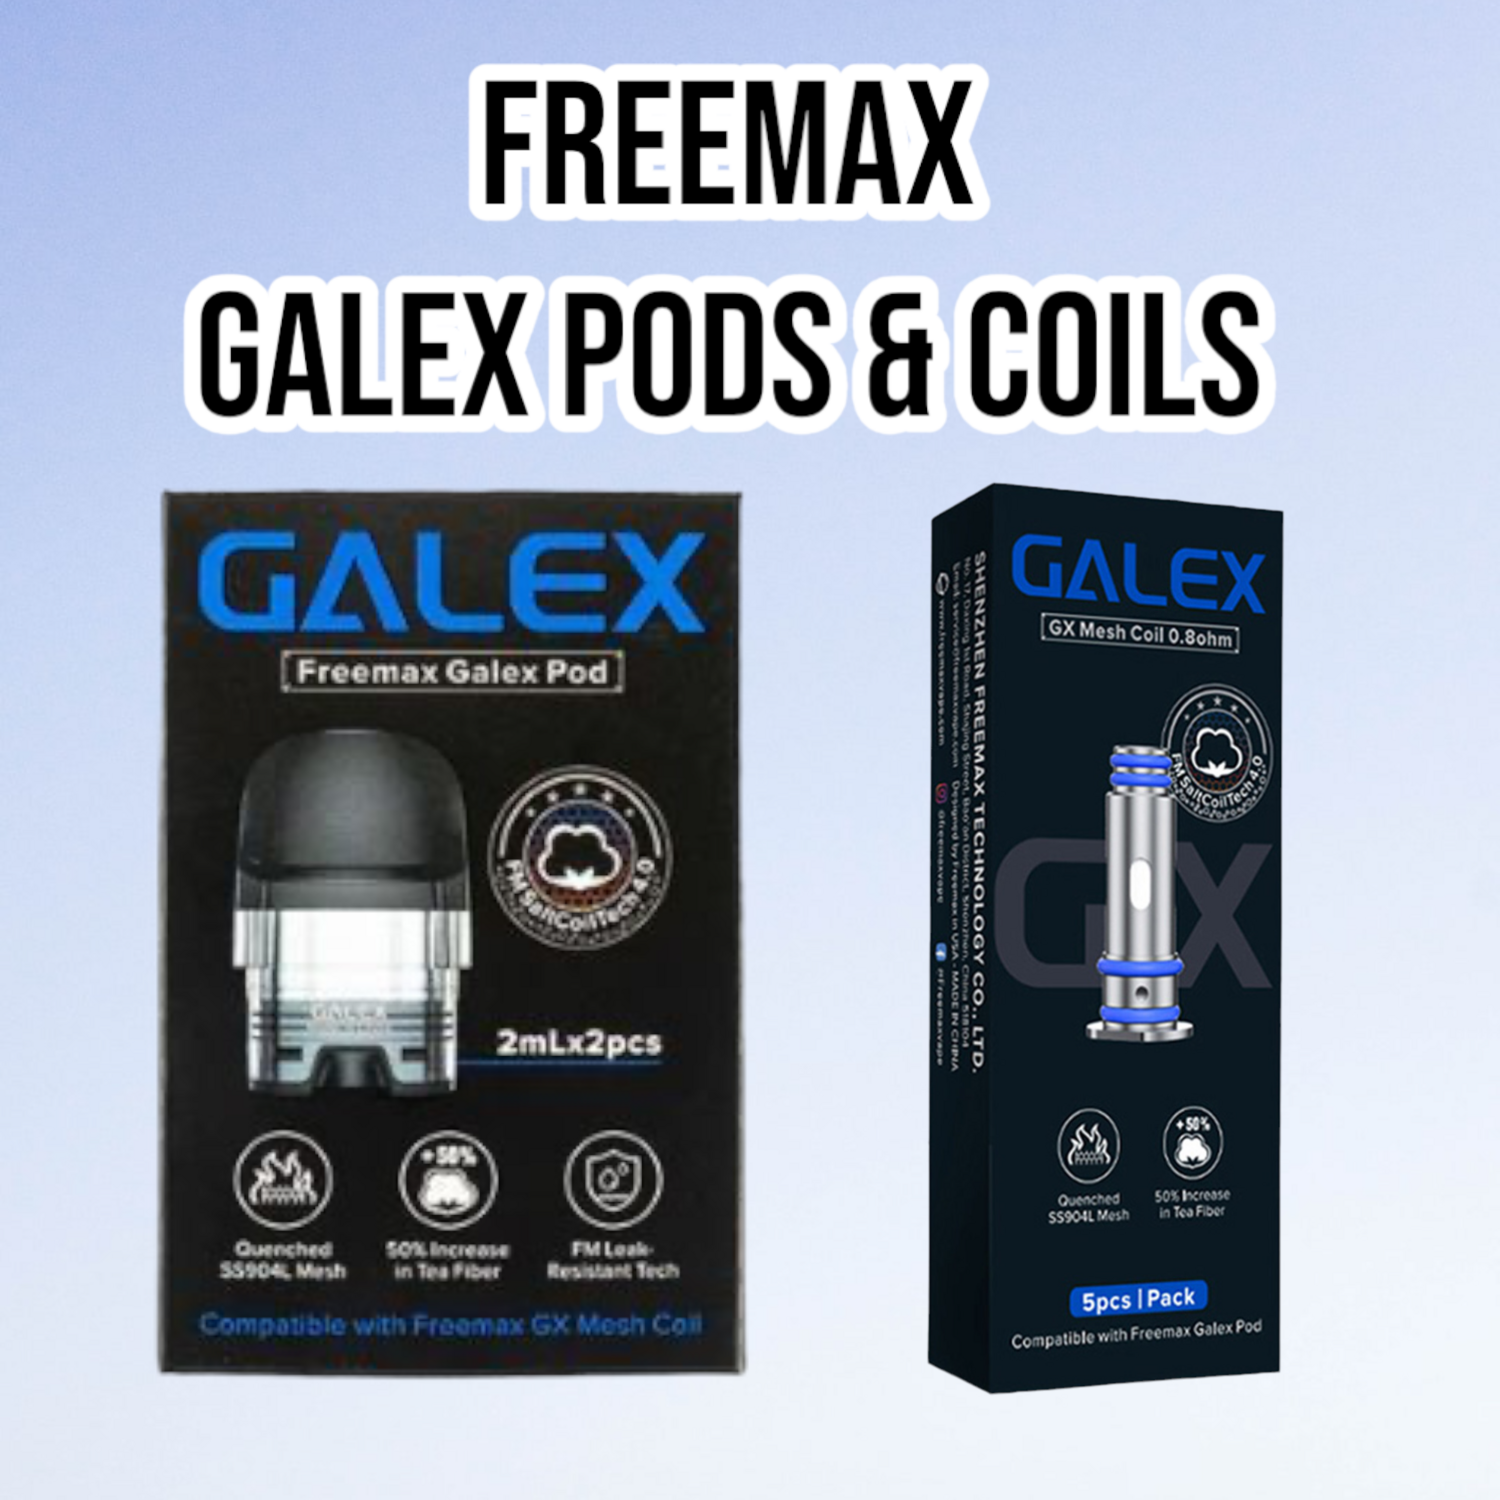 FREEMAX Galex Pods & Coils